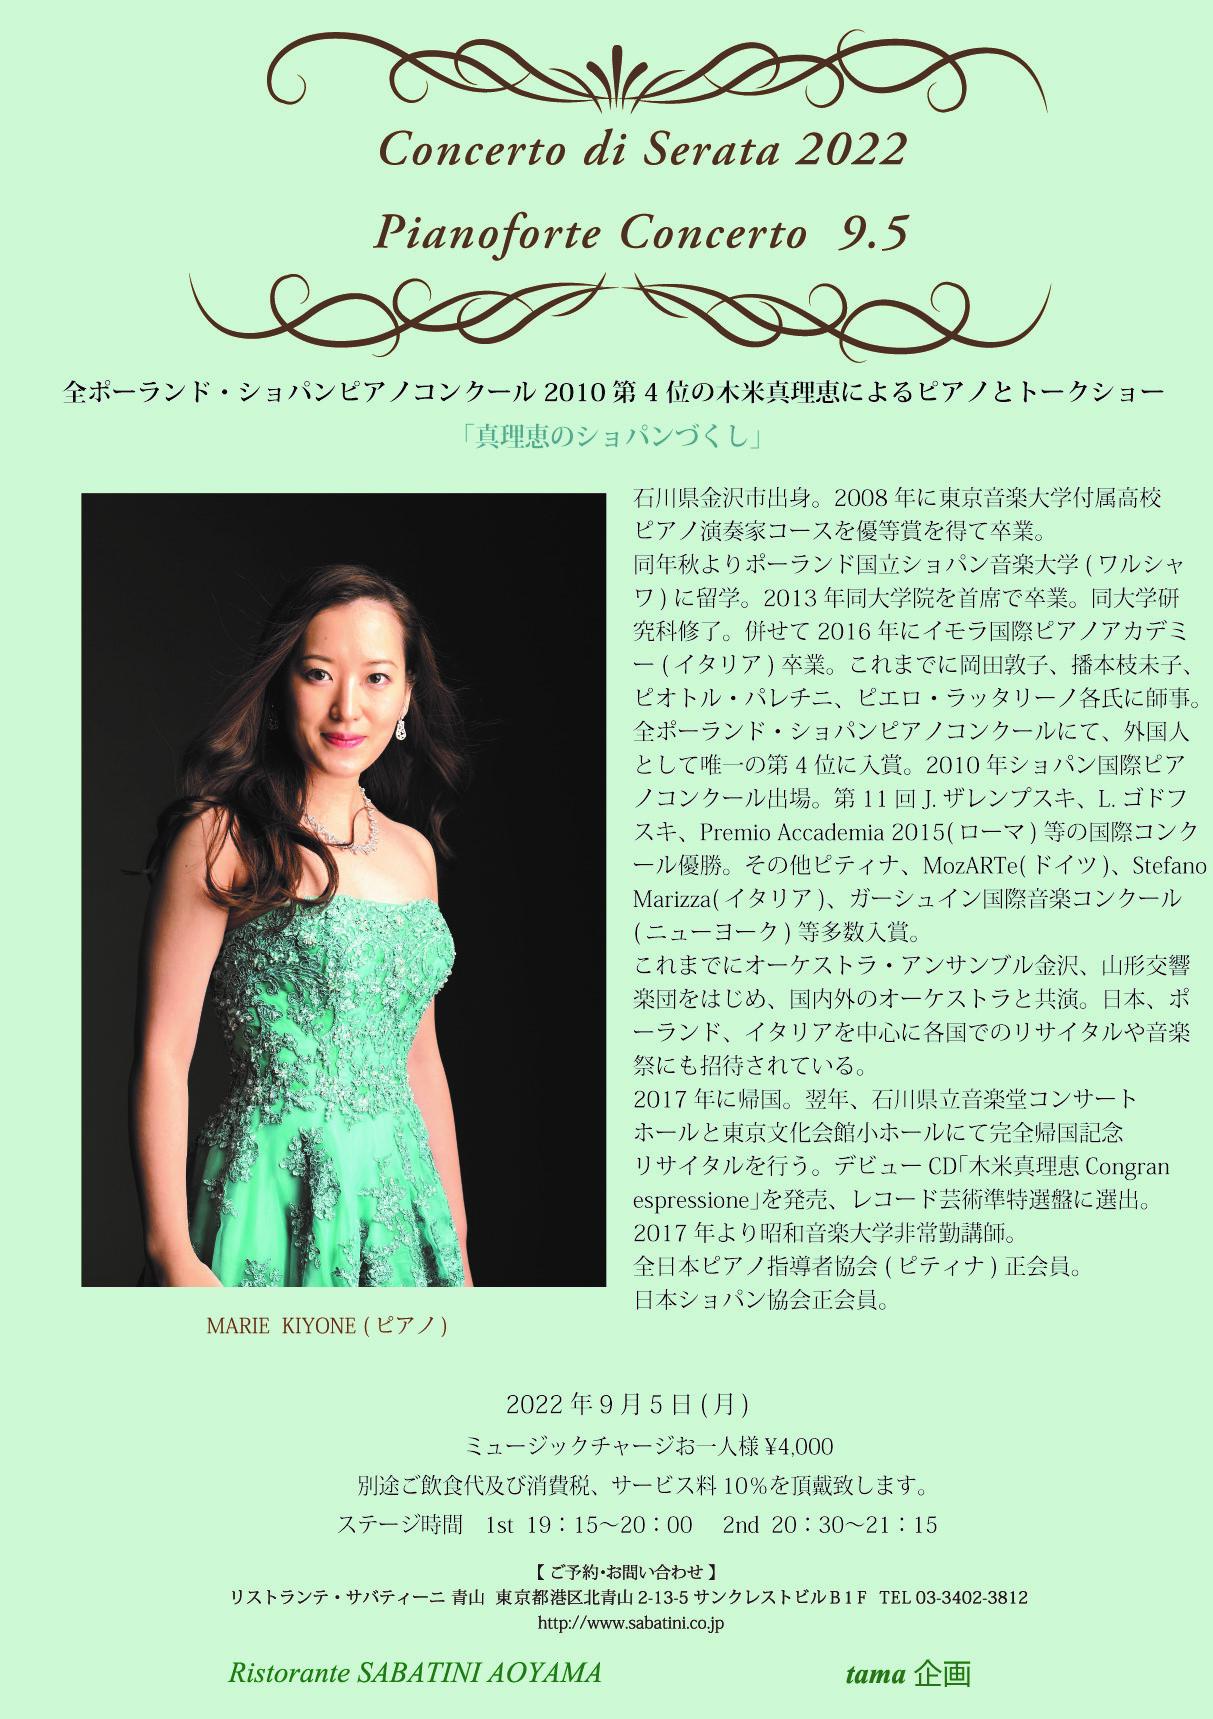 ■Ristorante SABATINI Aoyama【2022.9.5(月)ピアノコンサートのお知らせ】